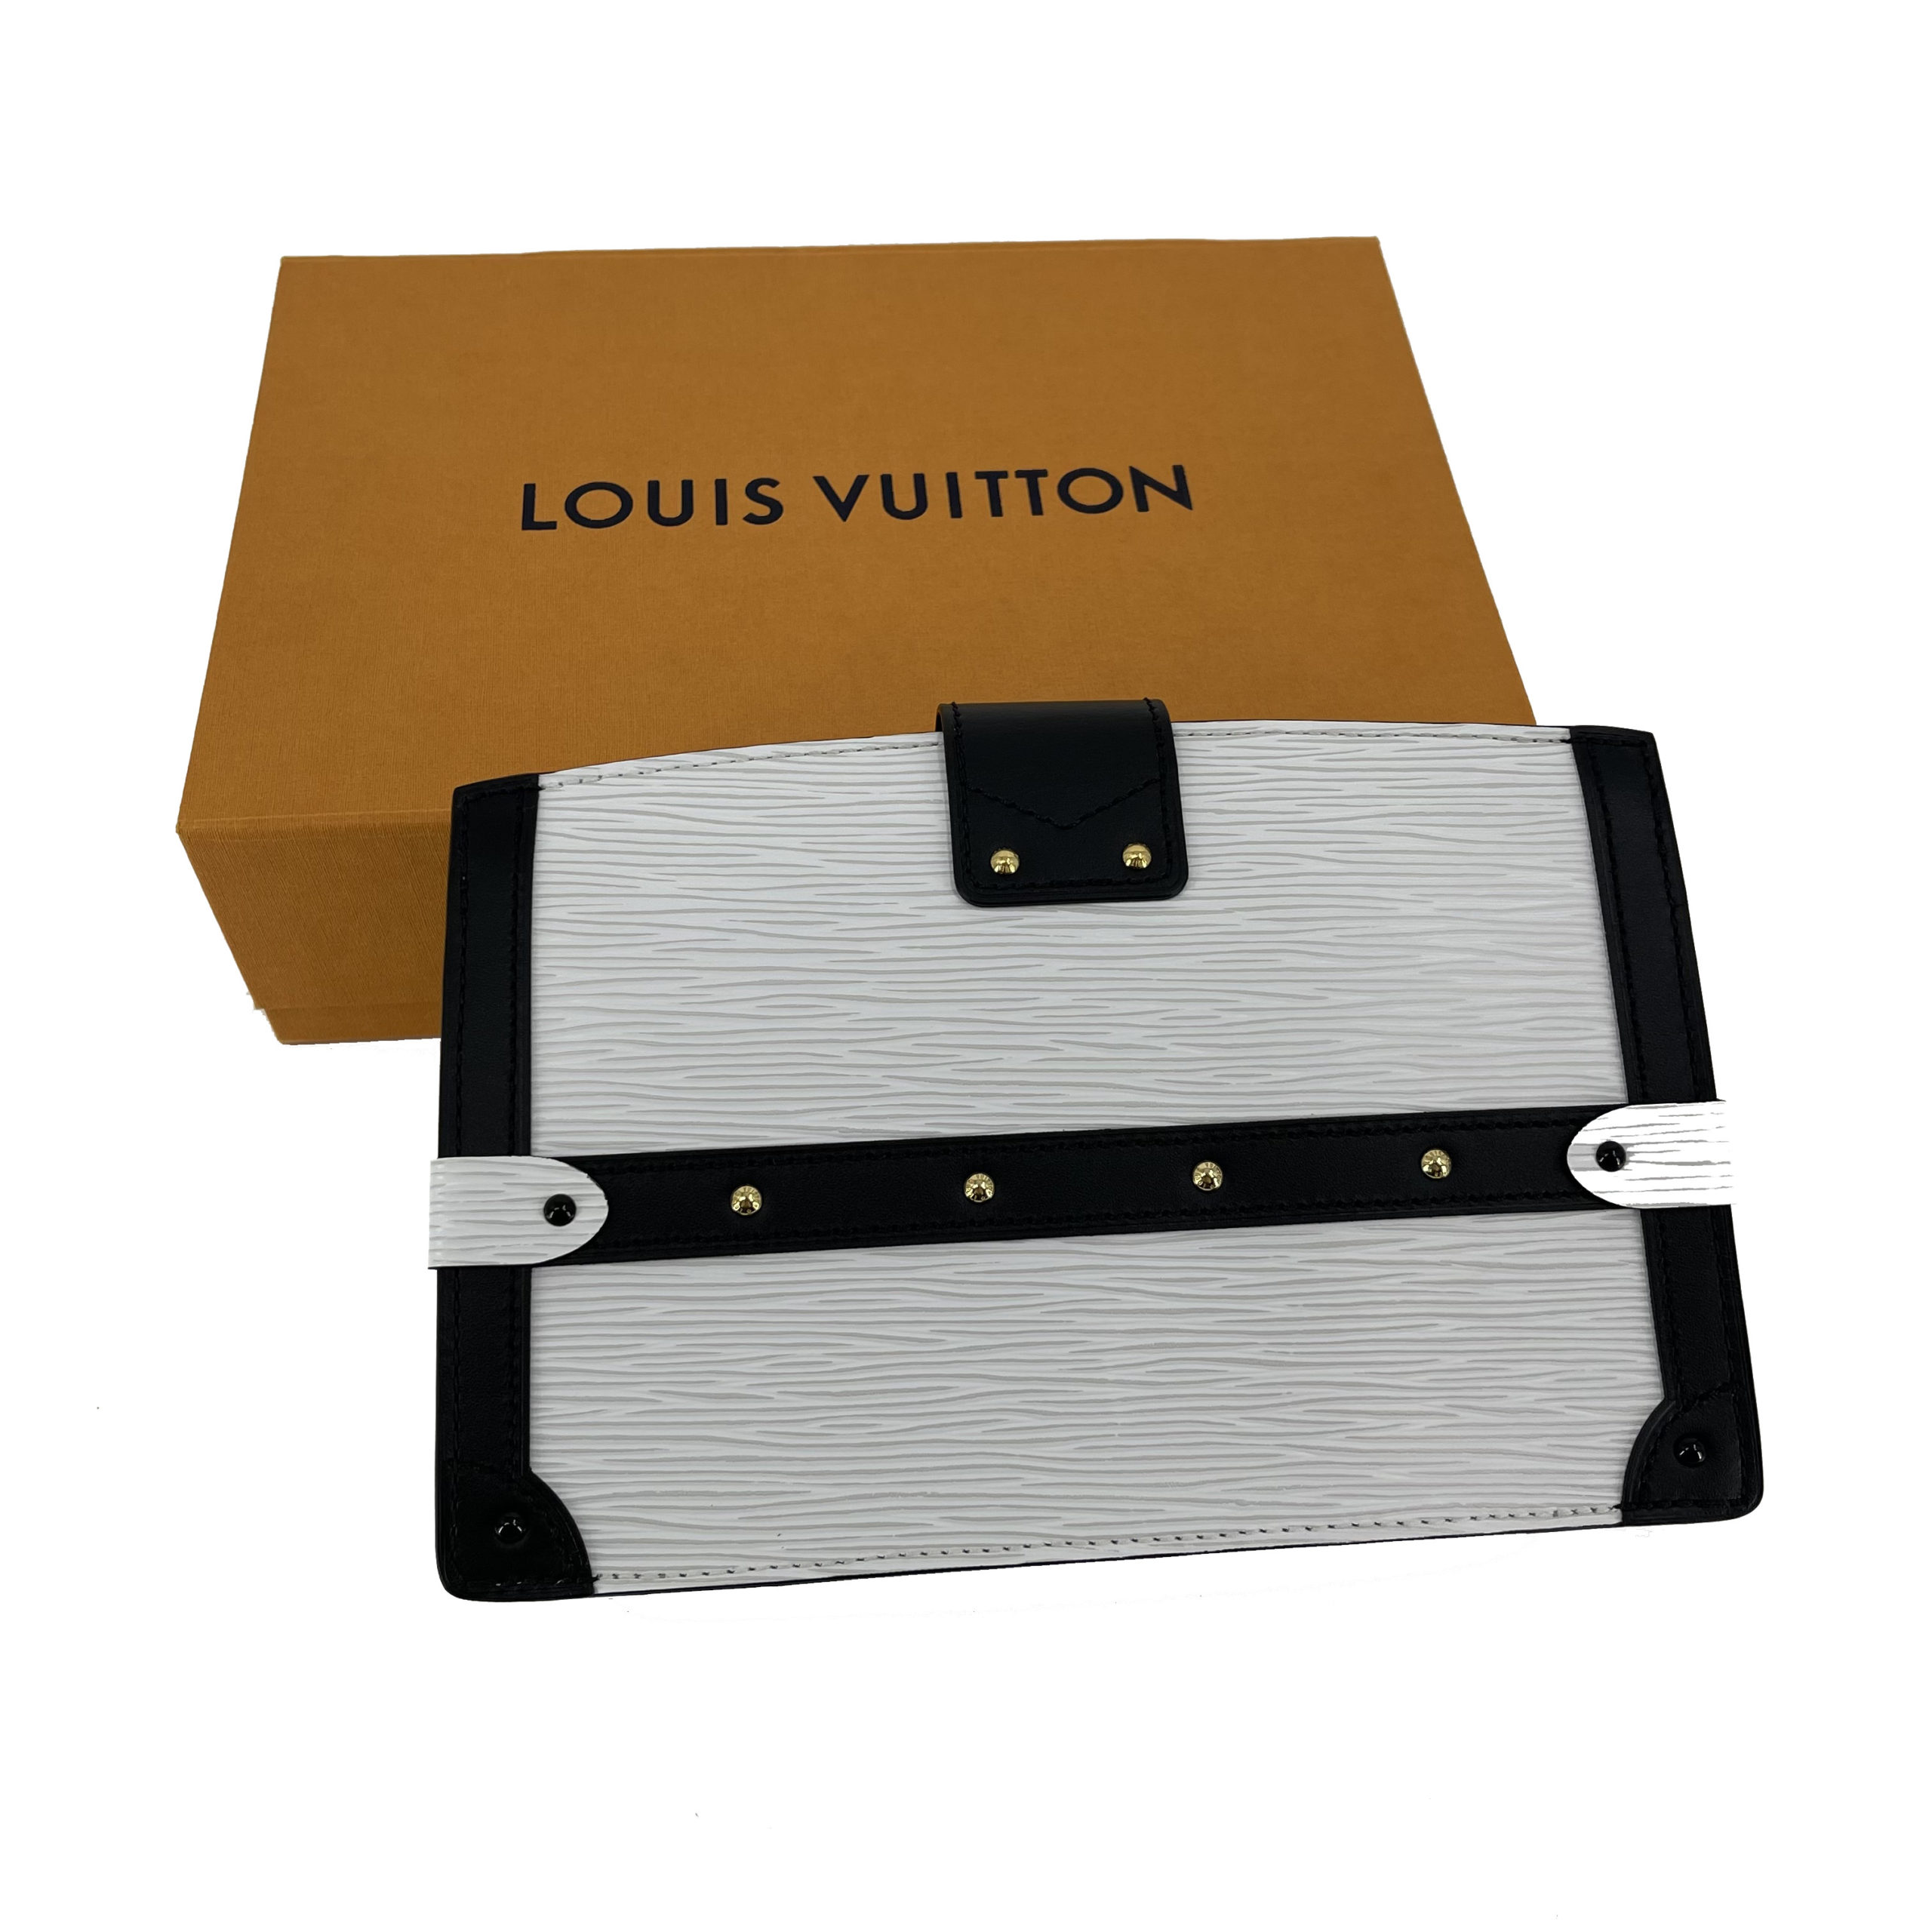 LOUIS VUITTON Epi Trunk Clutch White 340930